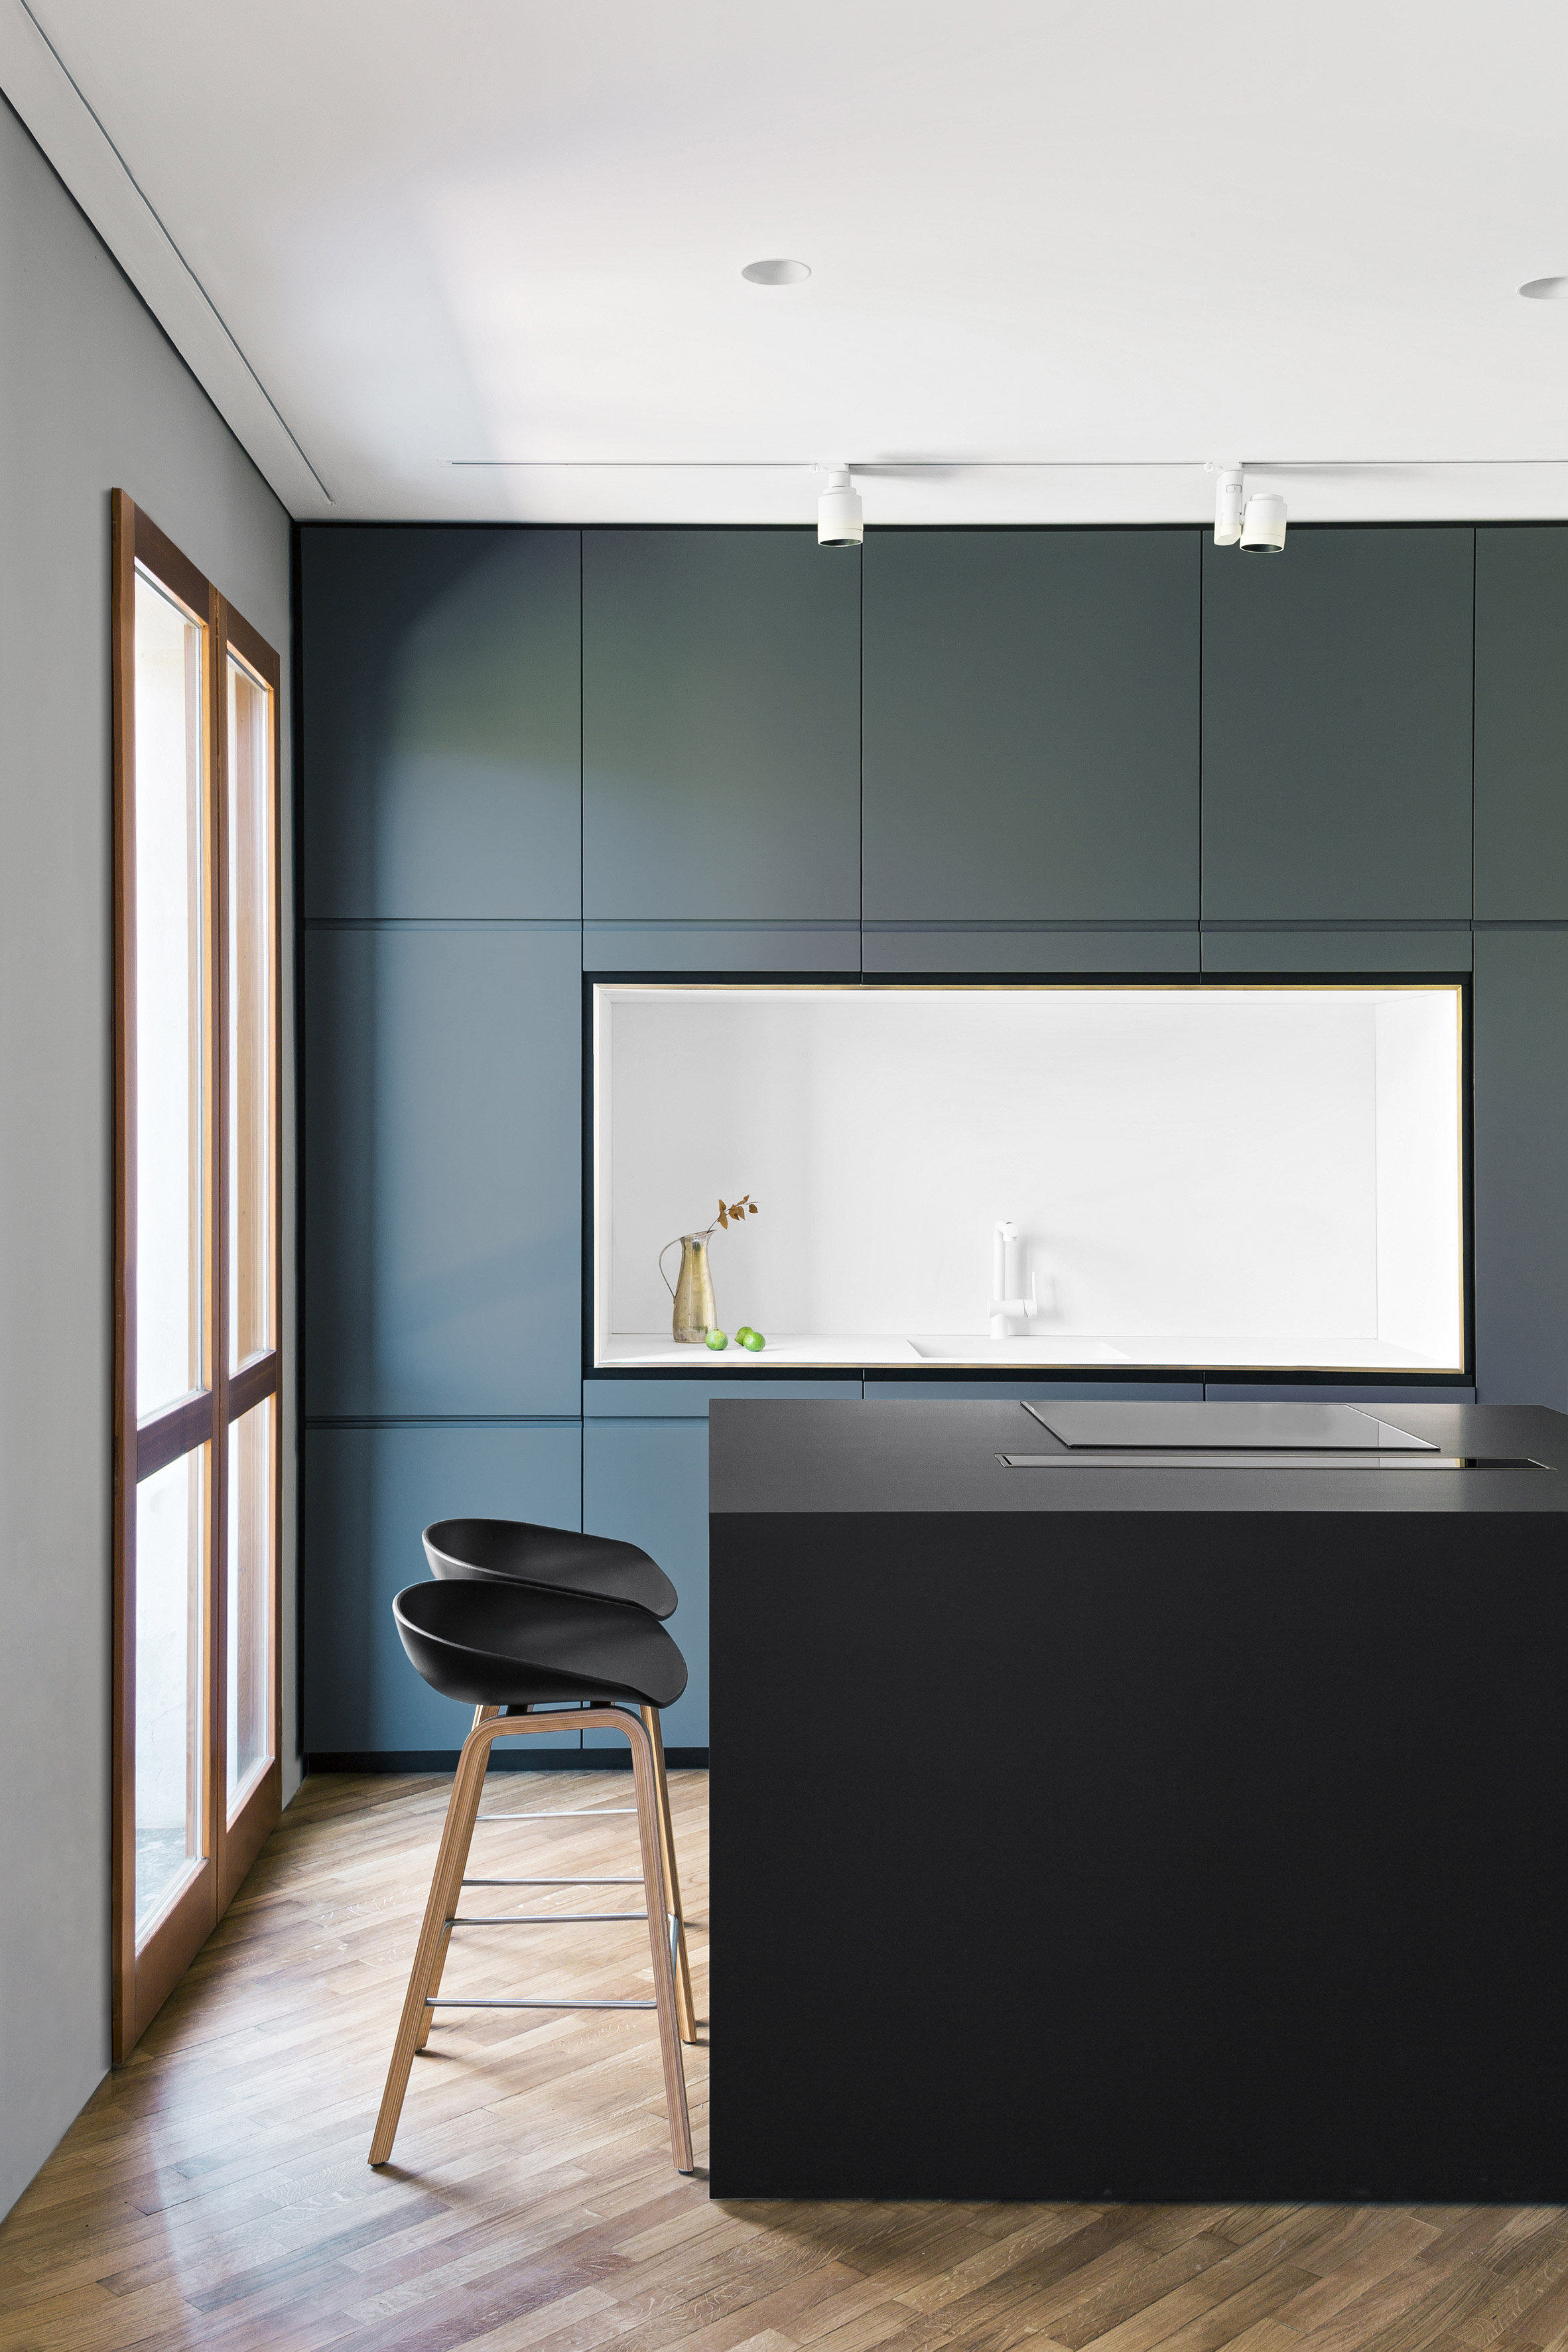 Strakke moderne keuken met blauwe wandkast en zwart kookeiland